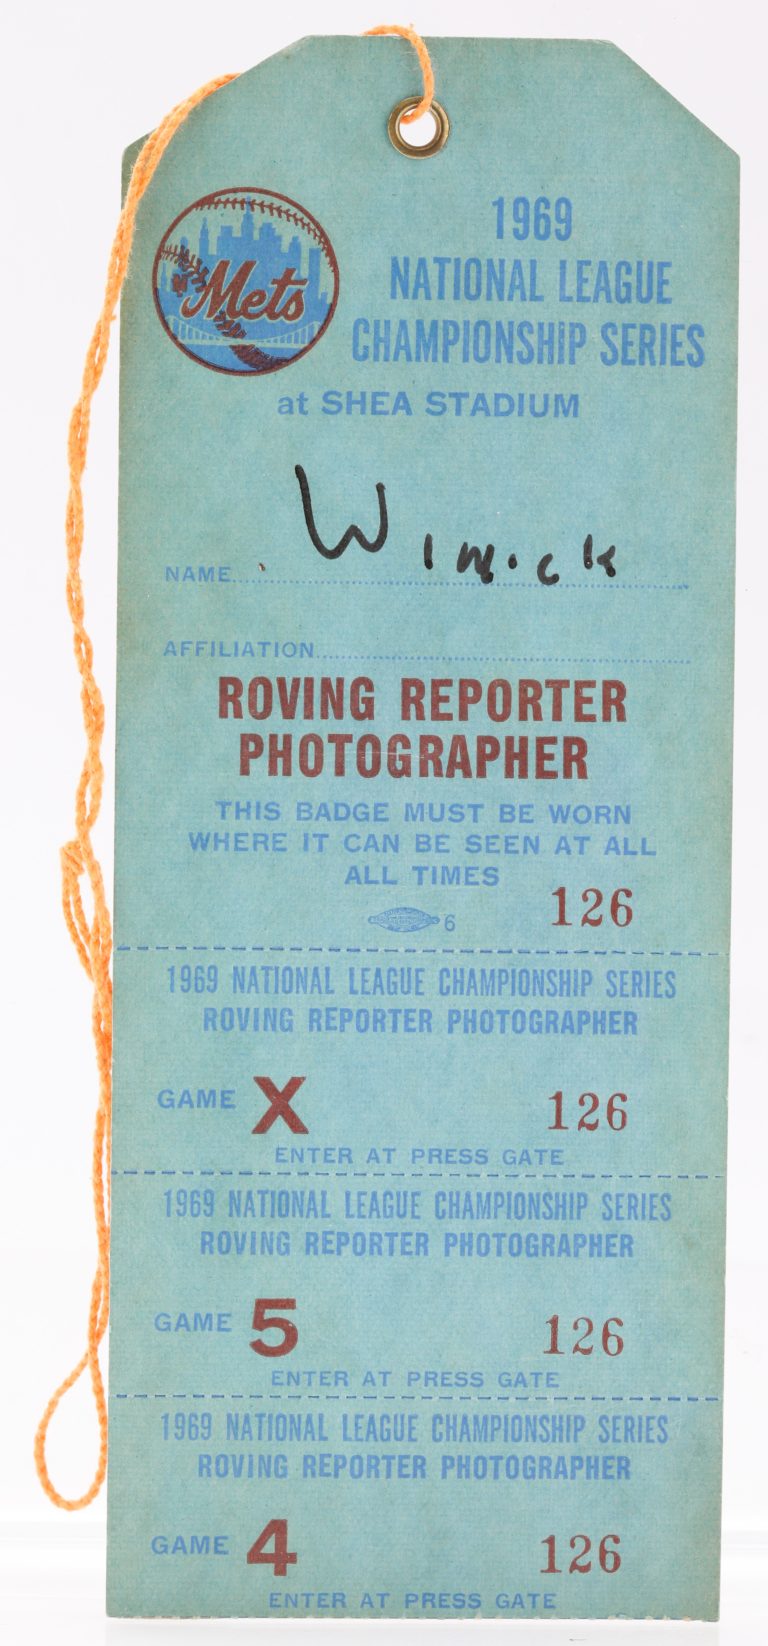 1969 NLCS Roving Reporter Photographer Pass